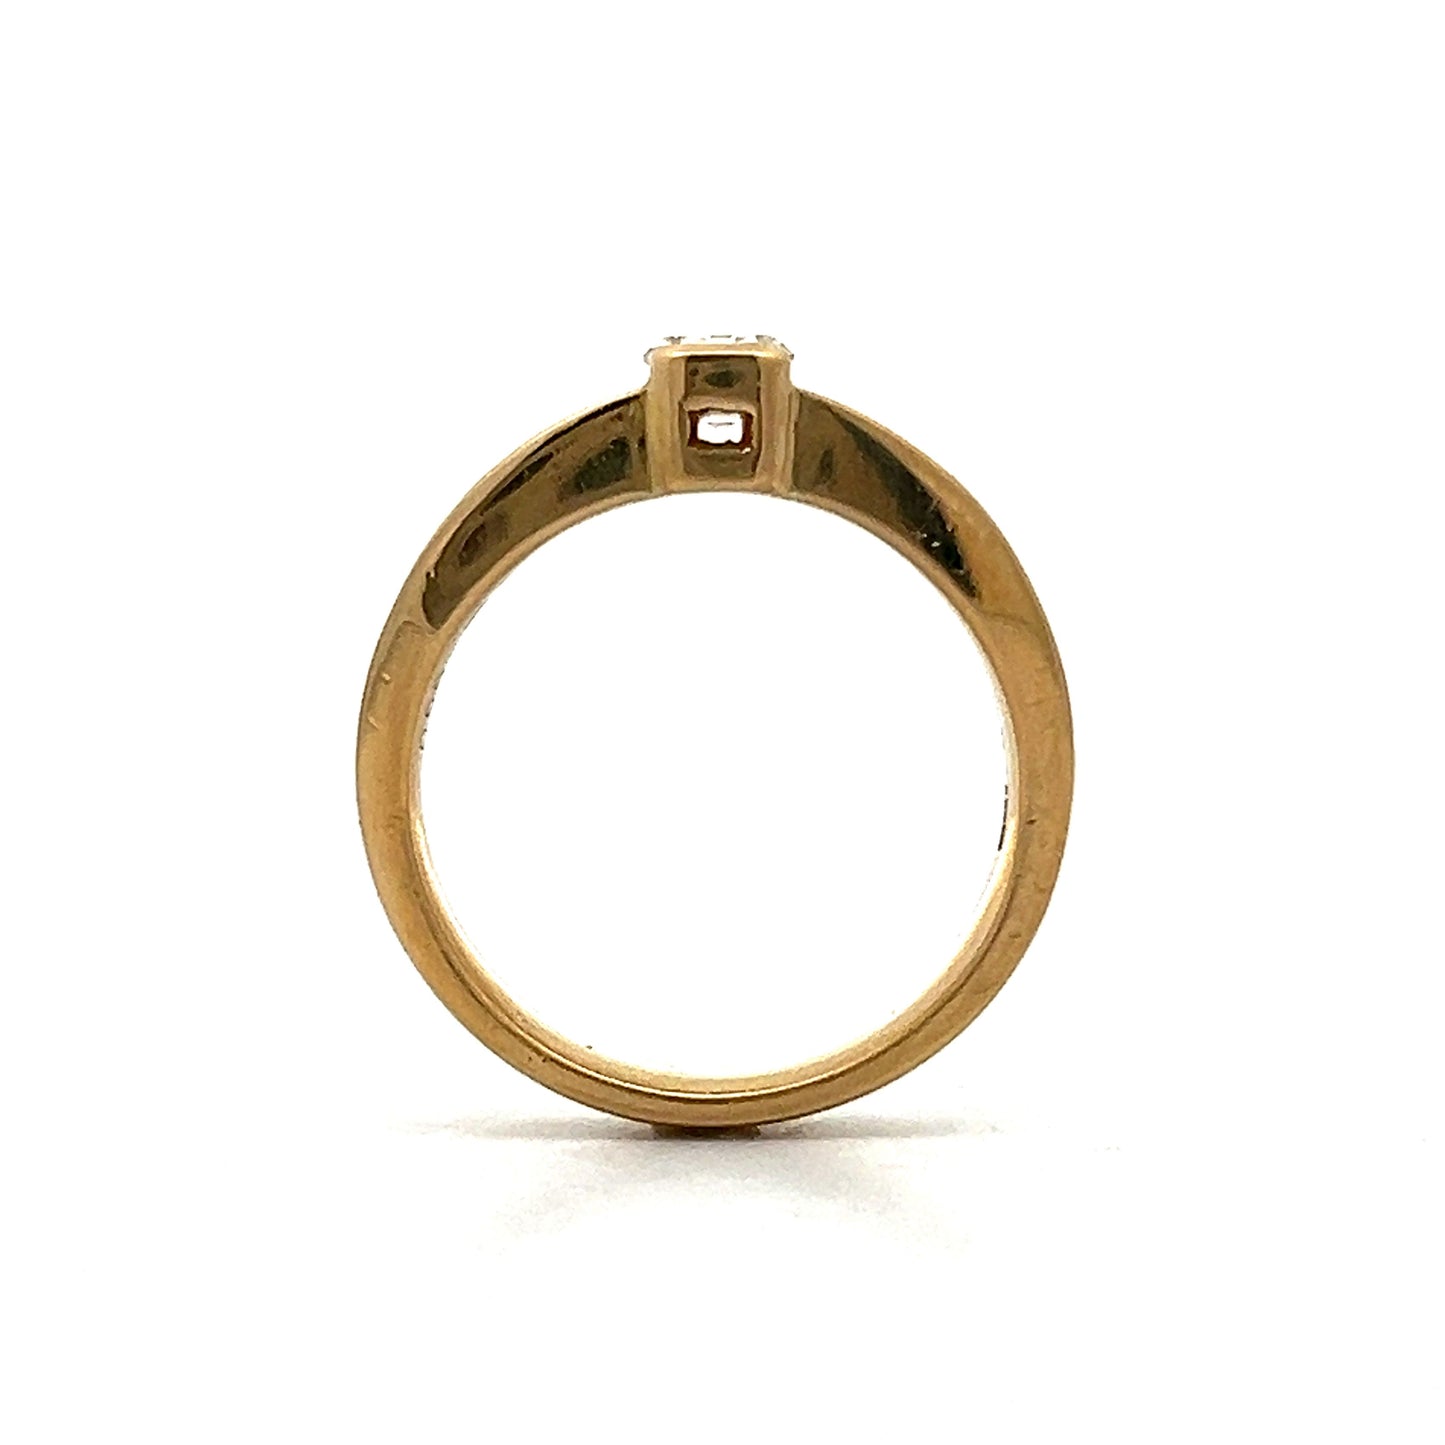 .58 Emerald Cut Diamond Engagement Ring in 18k Yellow Gold